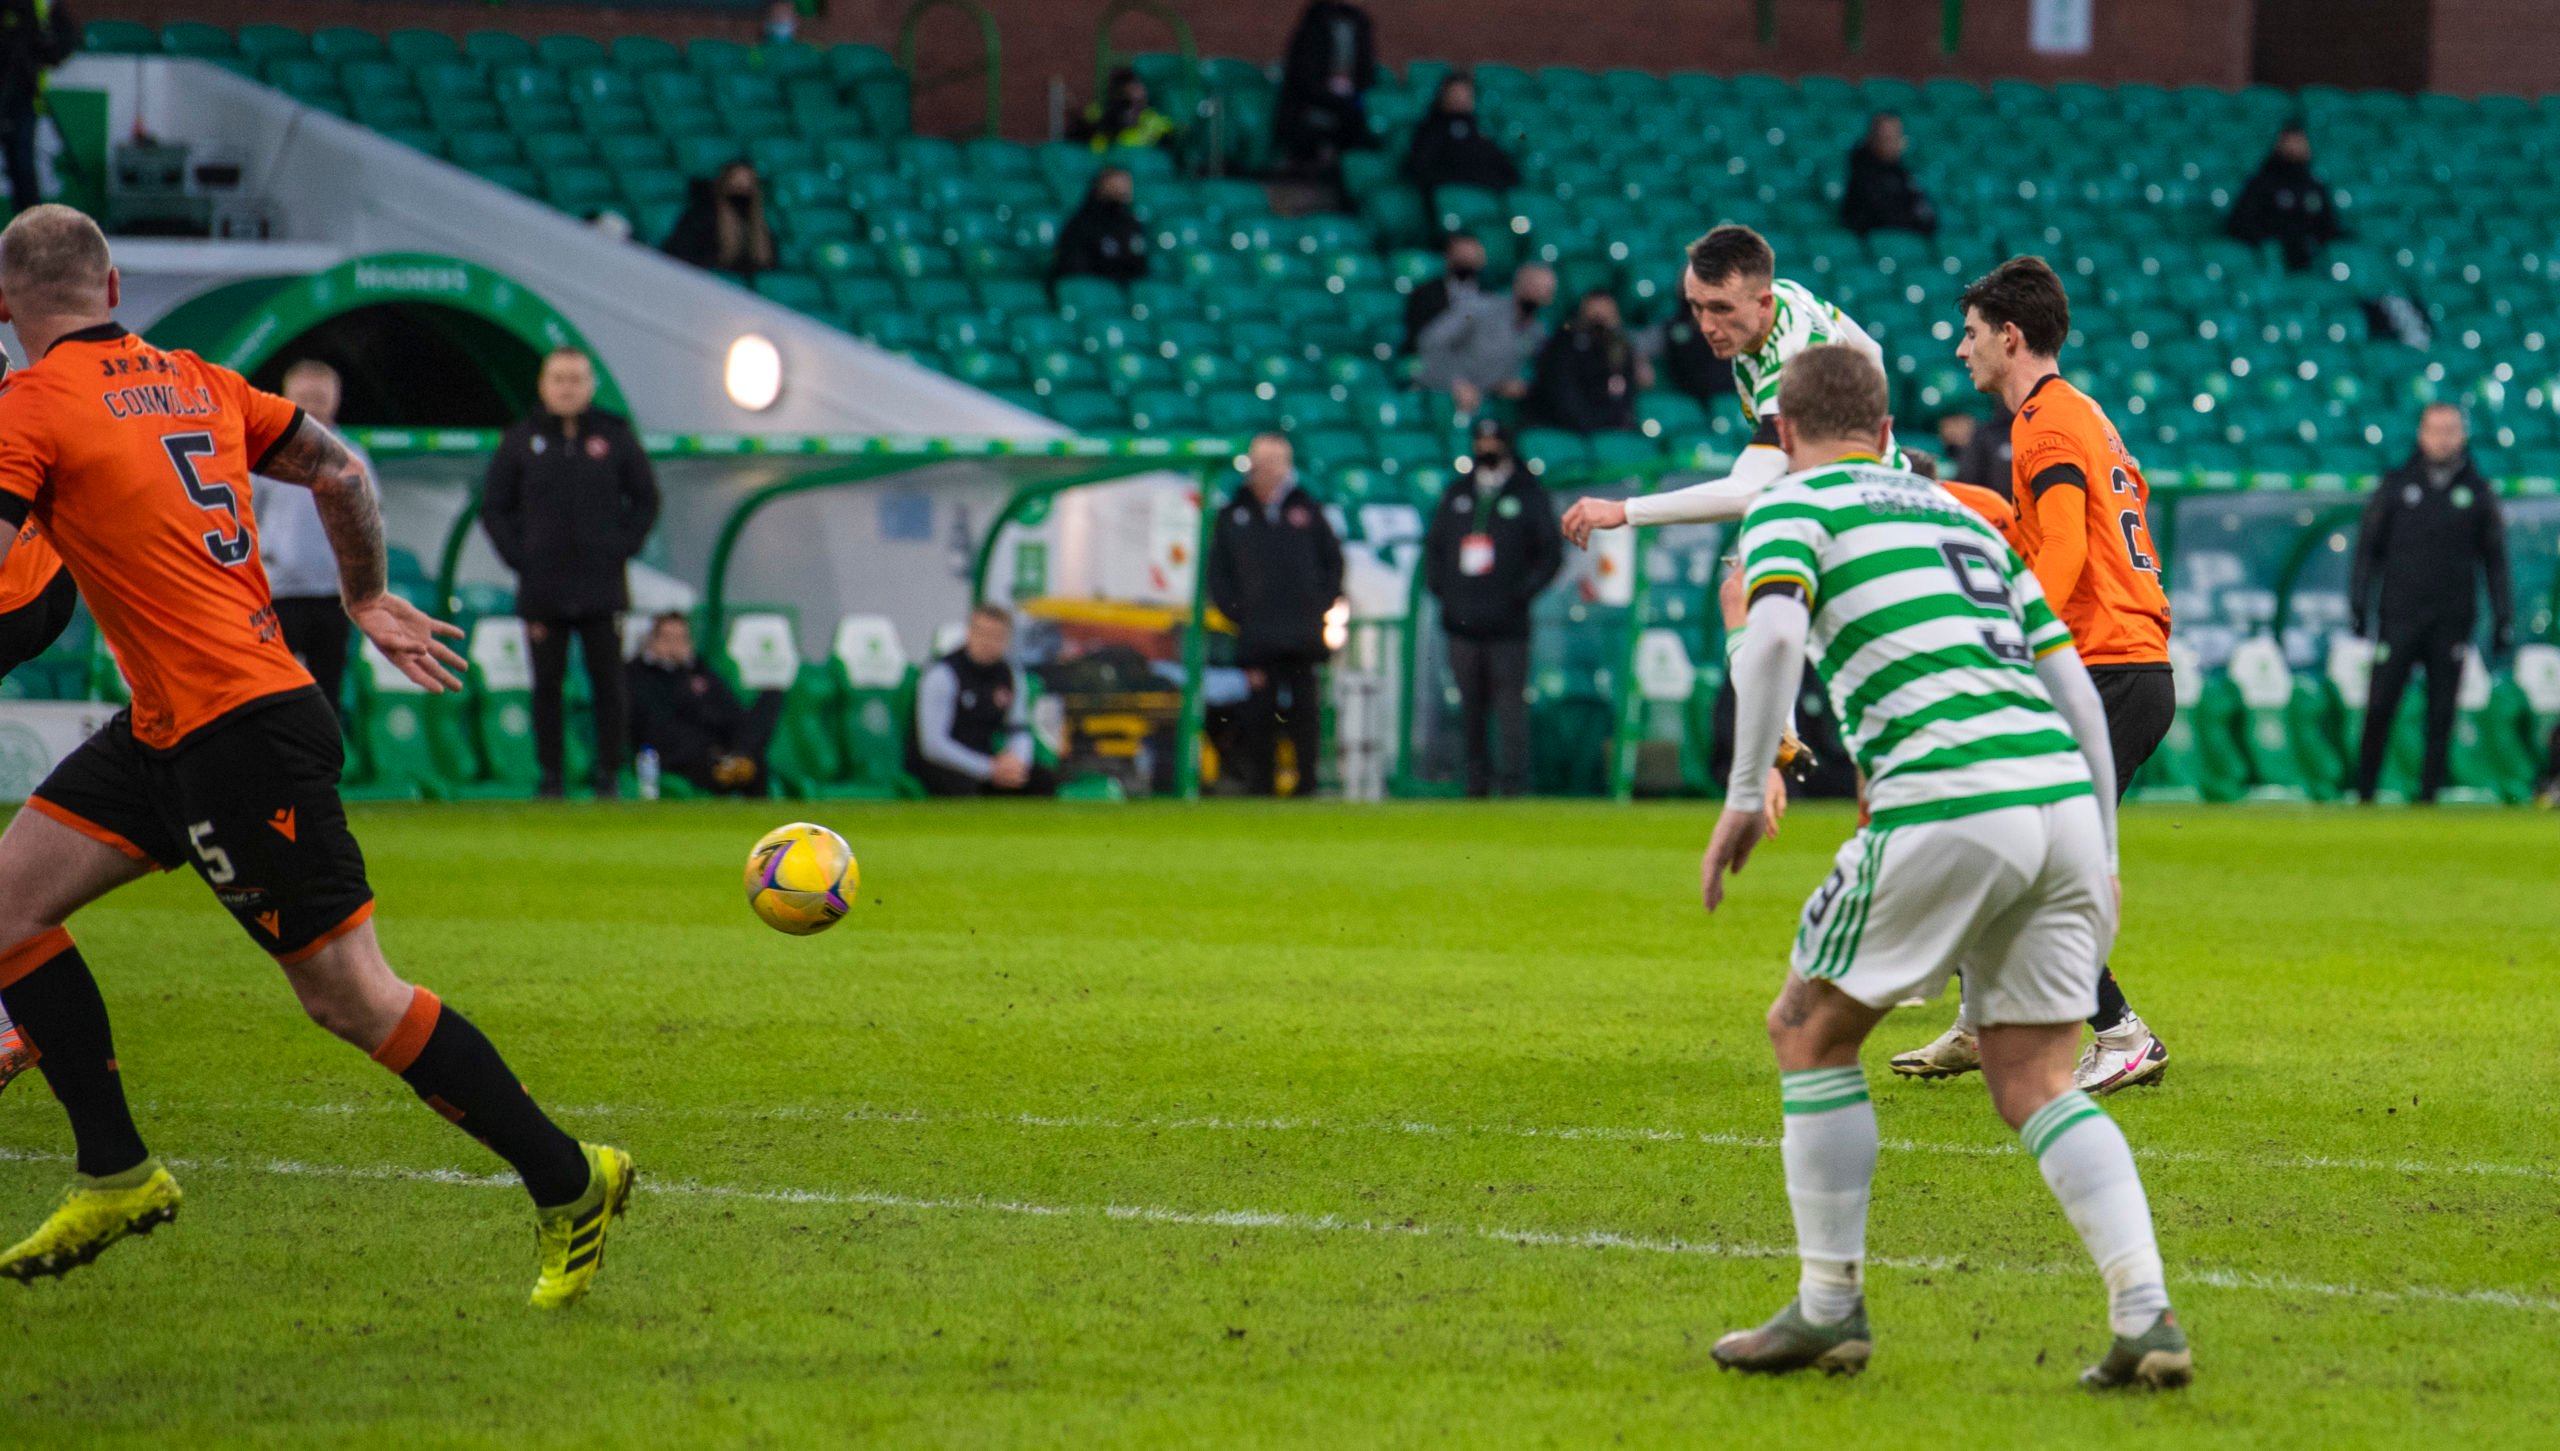 Celtic midfielder David Turnbull scores against Dundee United